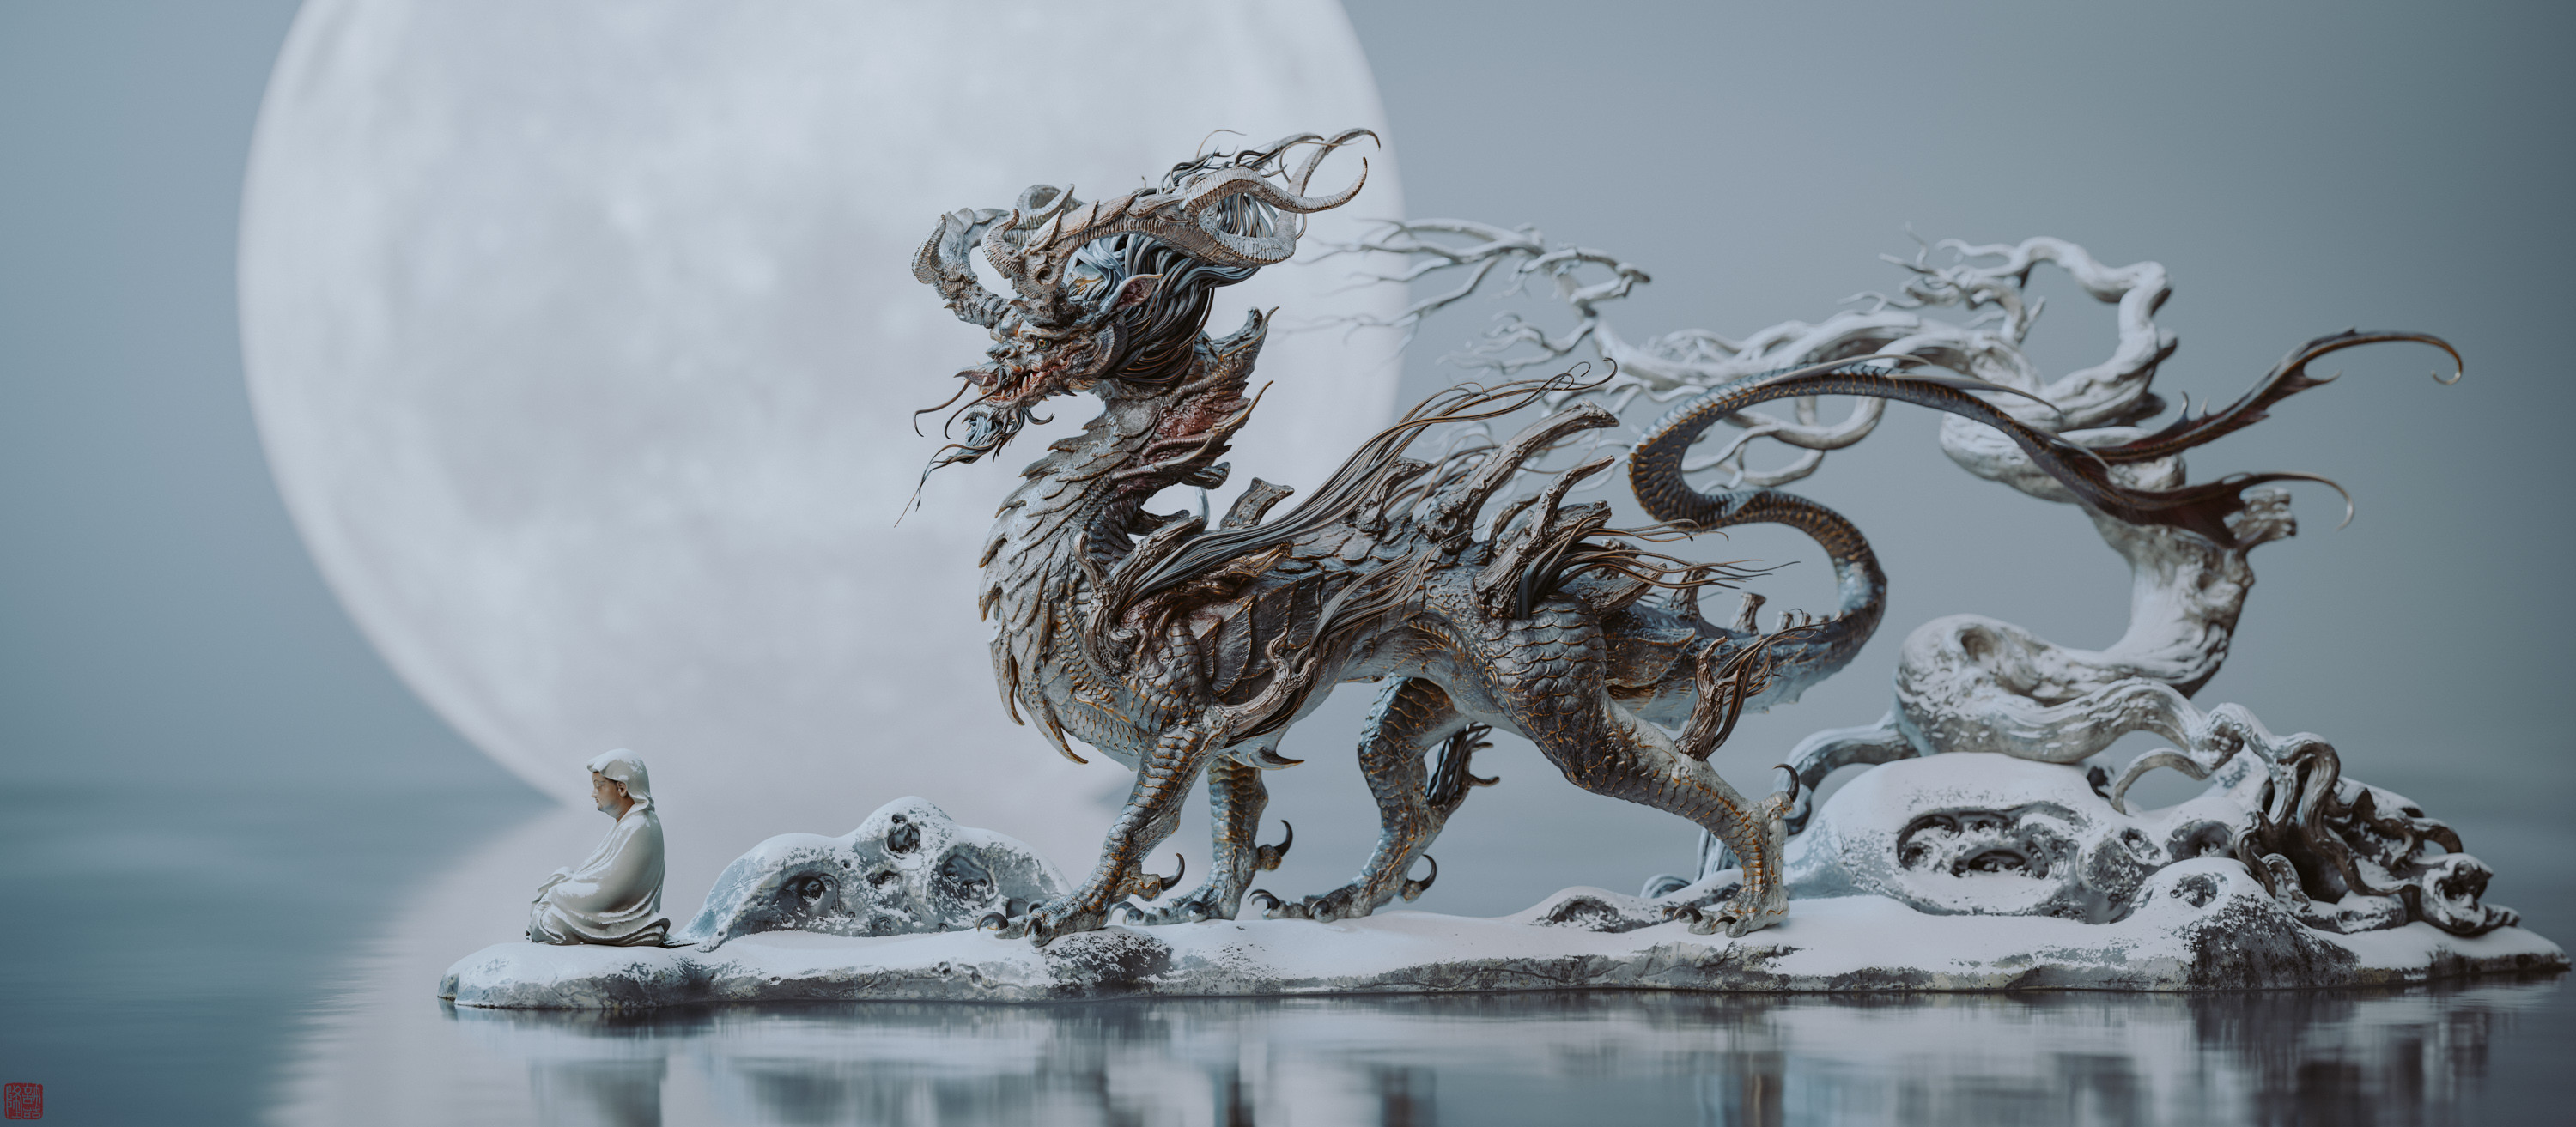 Artwork Digital Art Fantasy Art Dragon Creature Water Moon 3000x1313